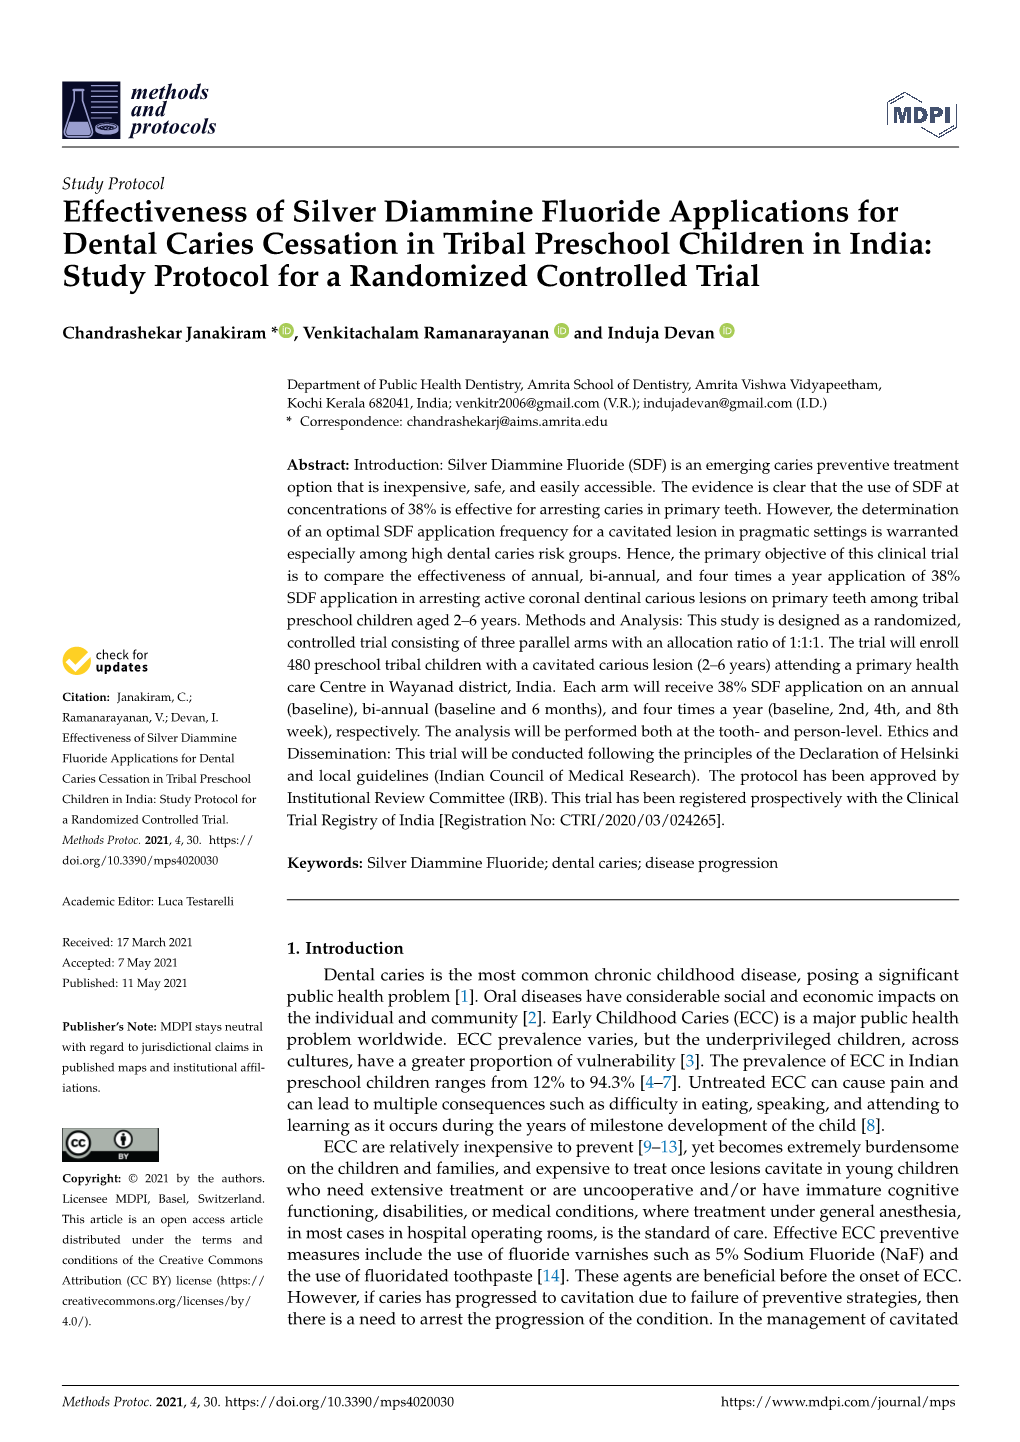 Effectiveness of Silver Diammine Fluoride Applications for Dental Caries Cessation in Tribal Preschool Children in India